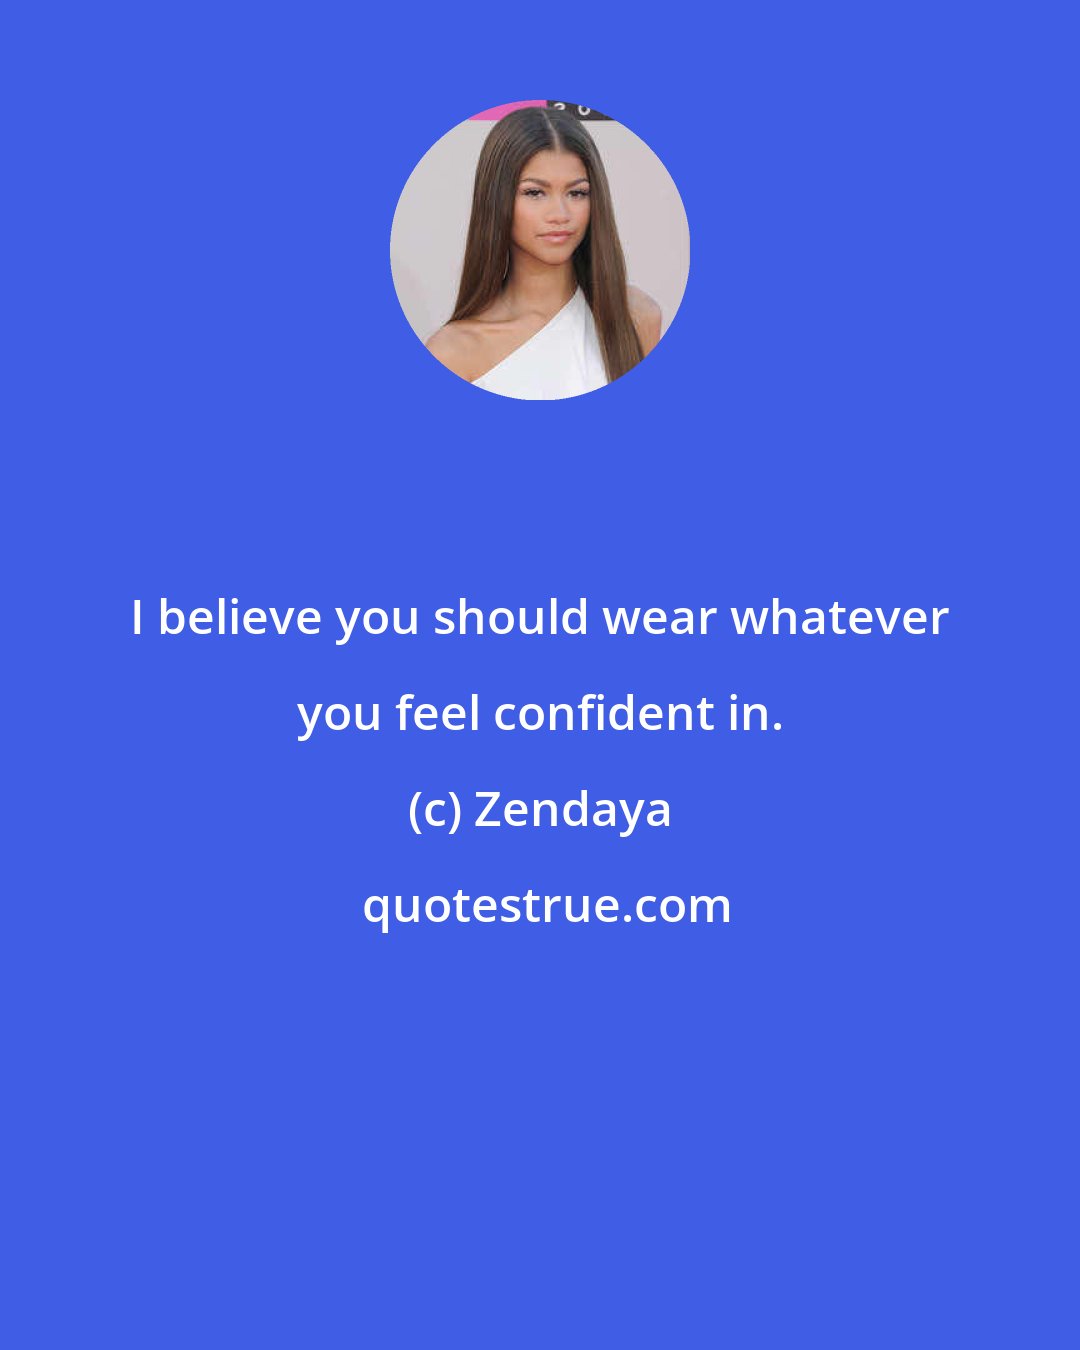 Zendaya: I believe you should wear whatever you feel confident in.